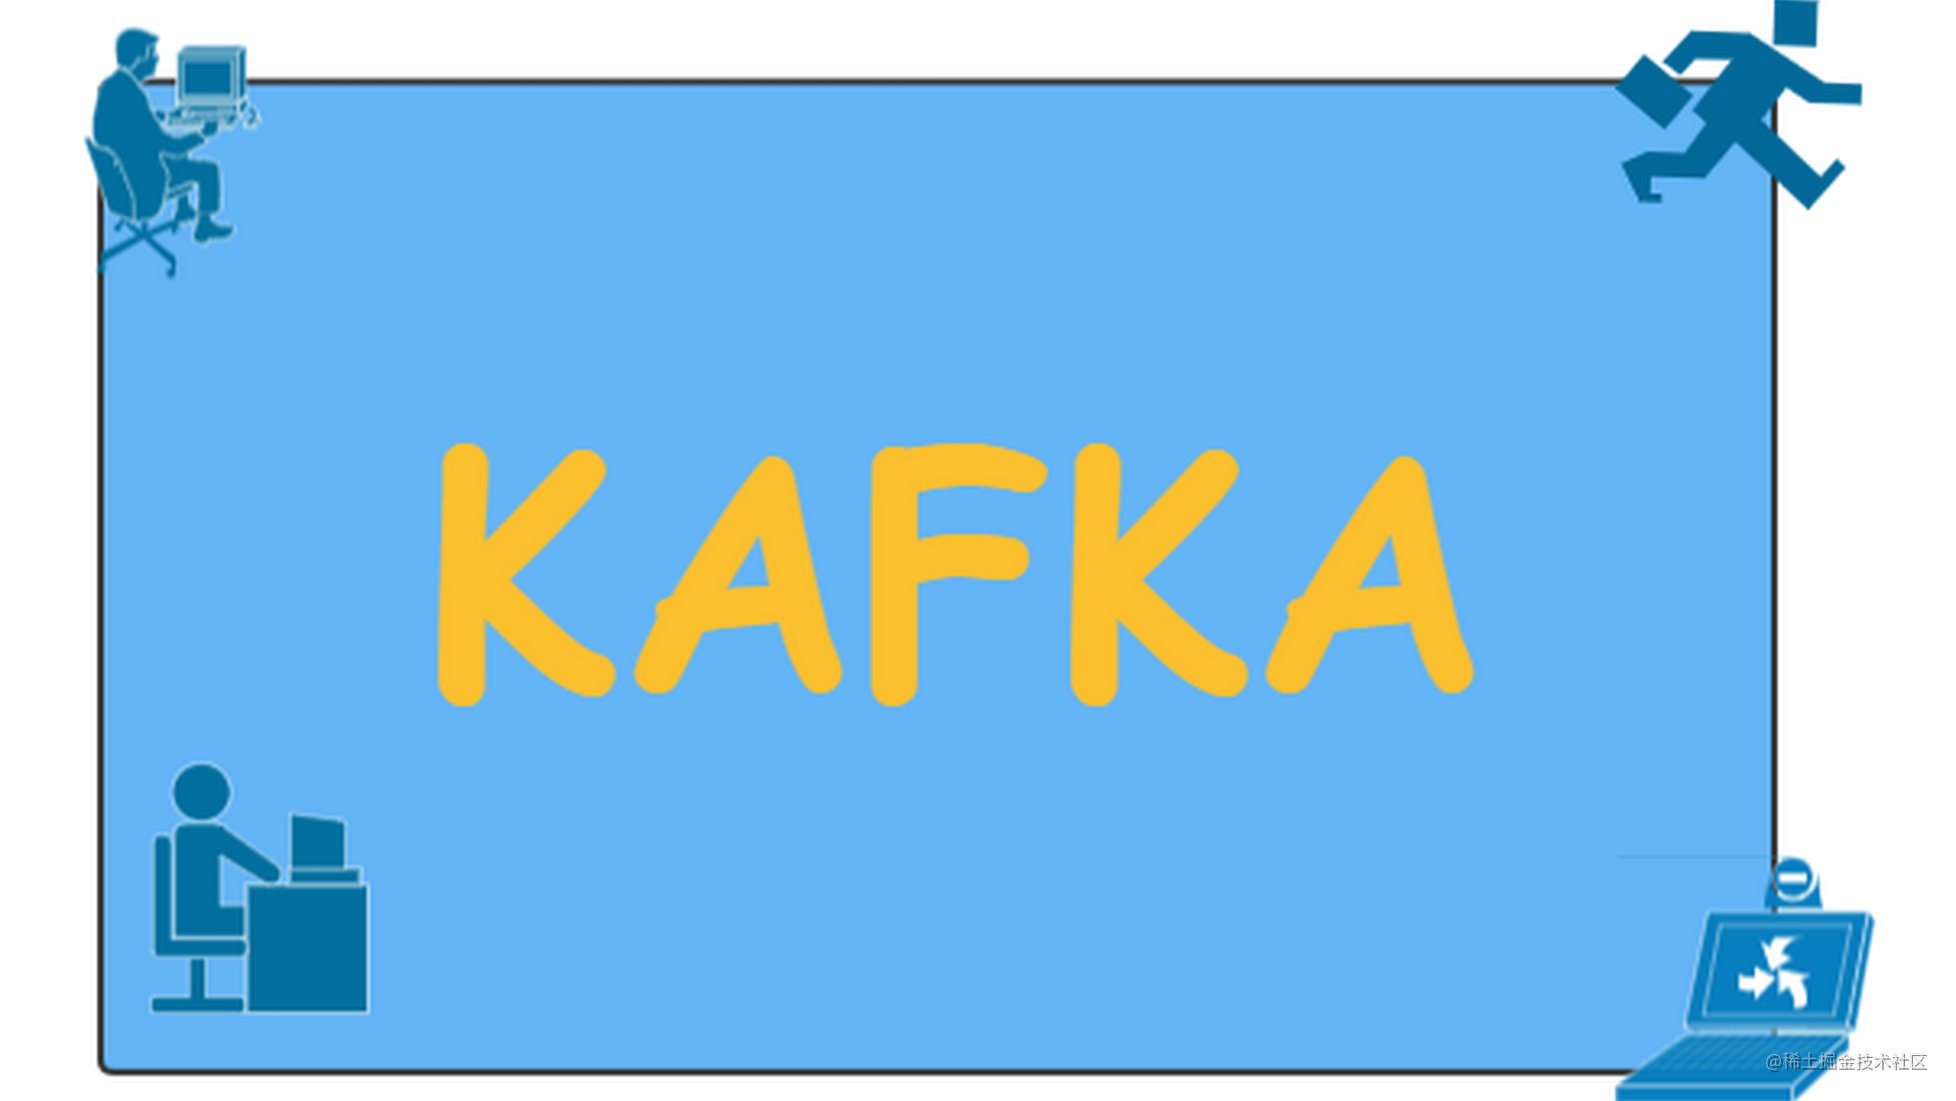 kafka(一)：kafka集群部署（kafka+zk模式）